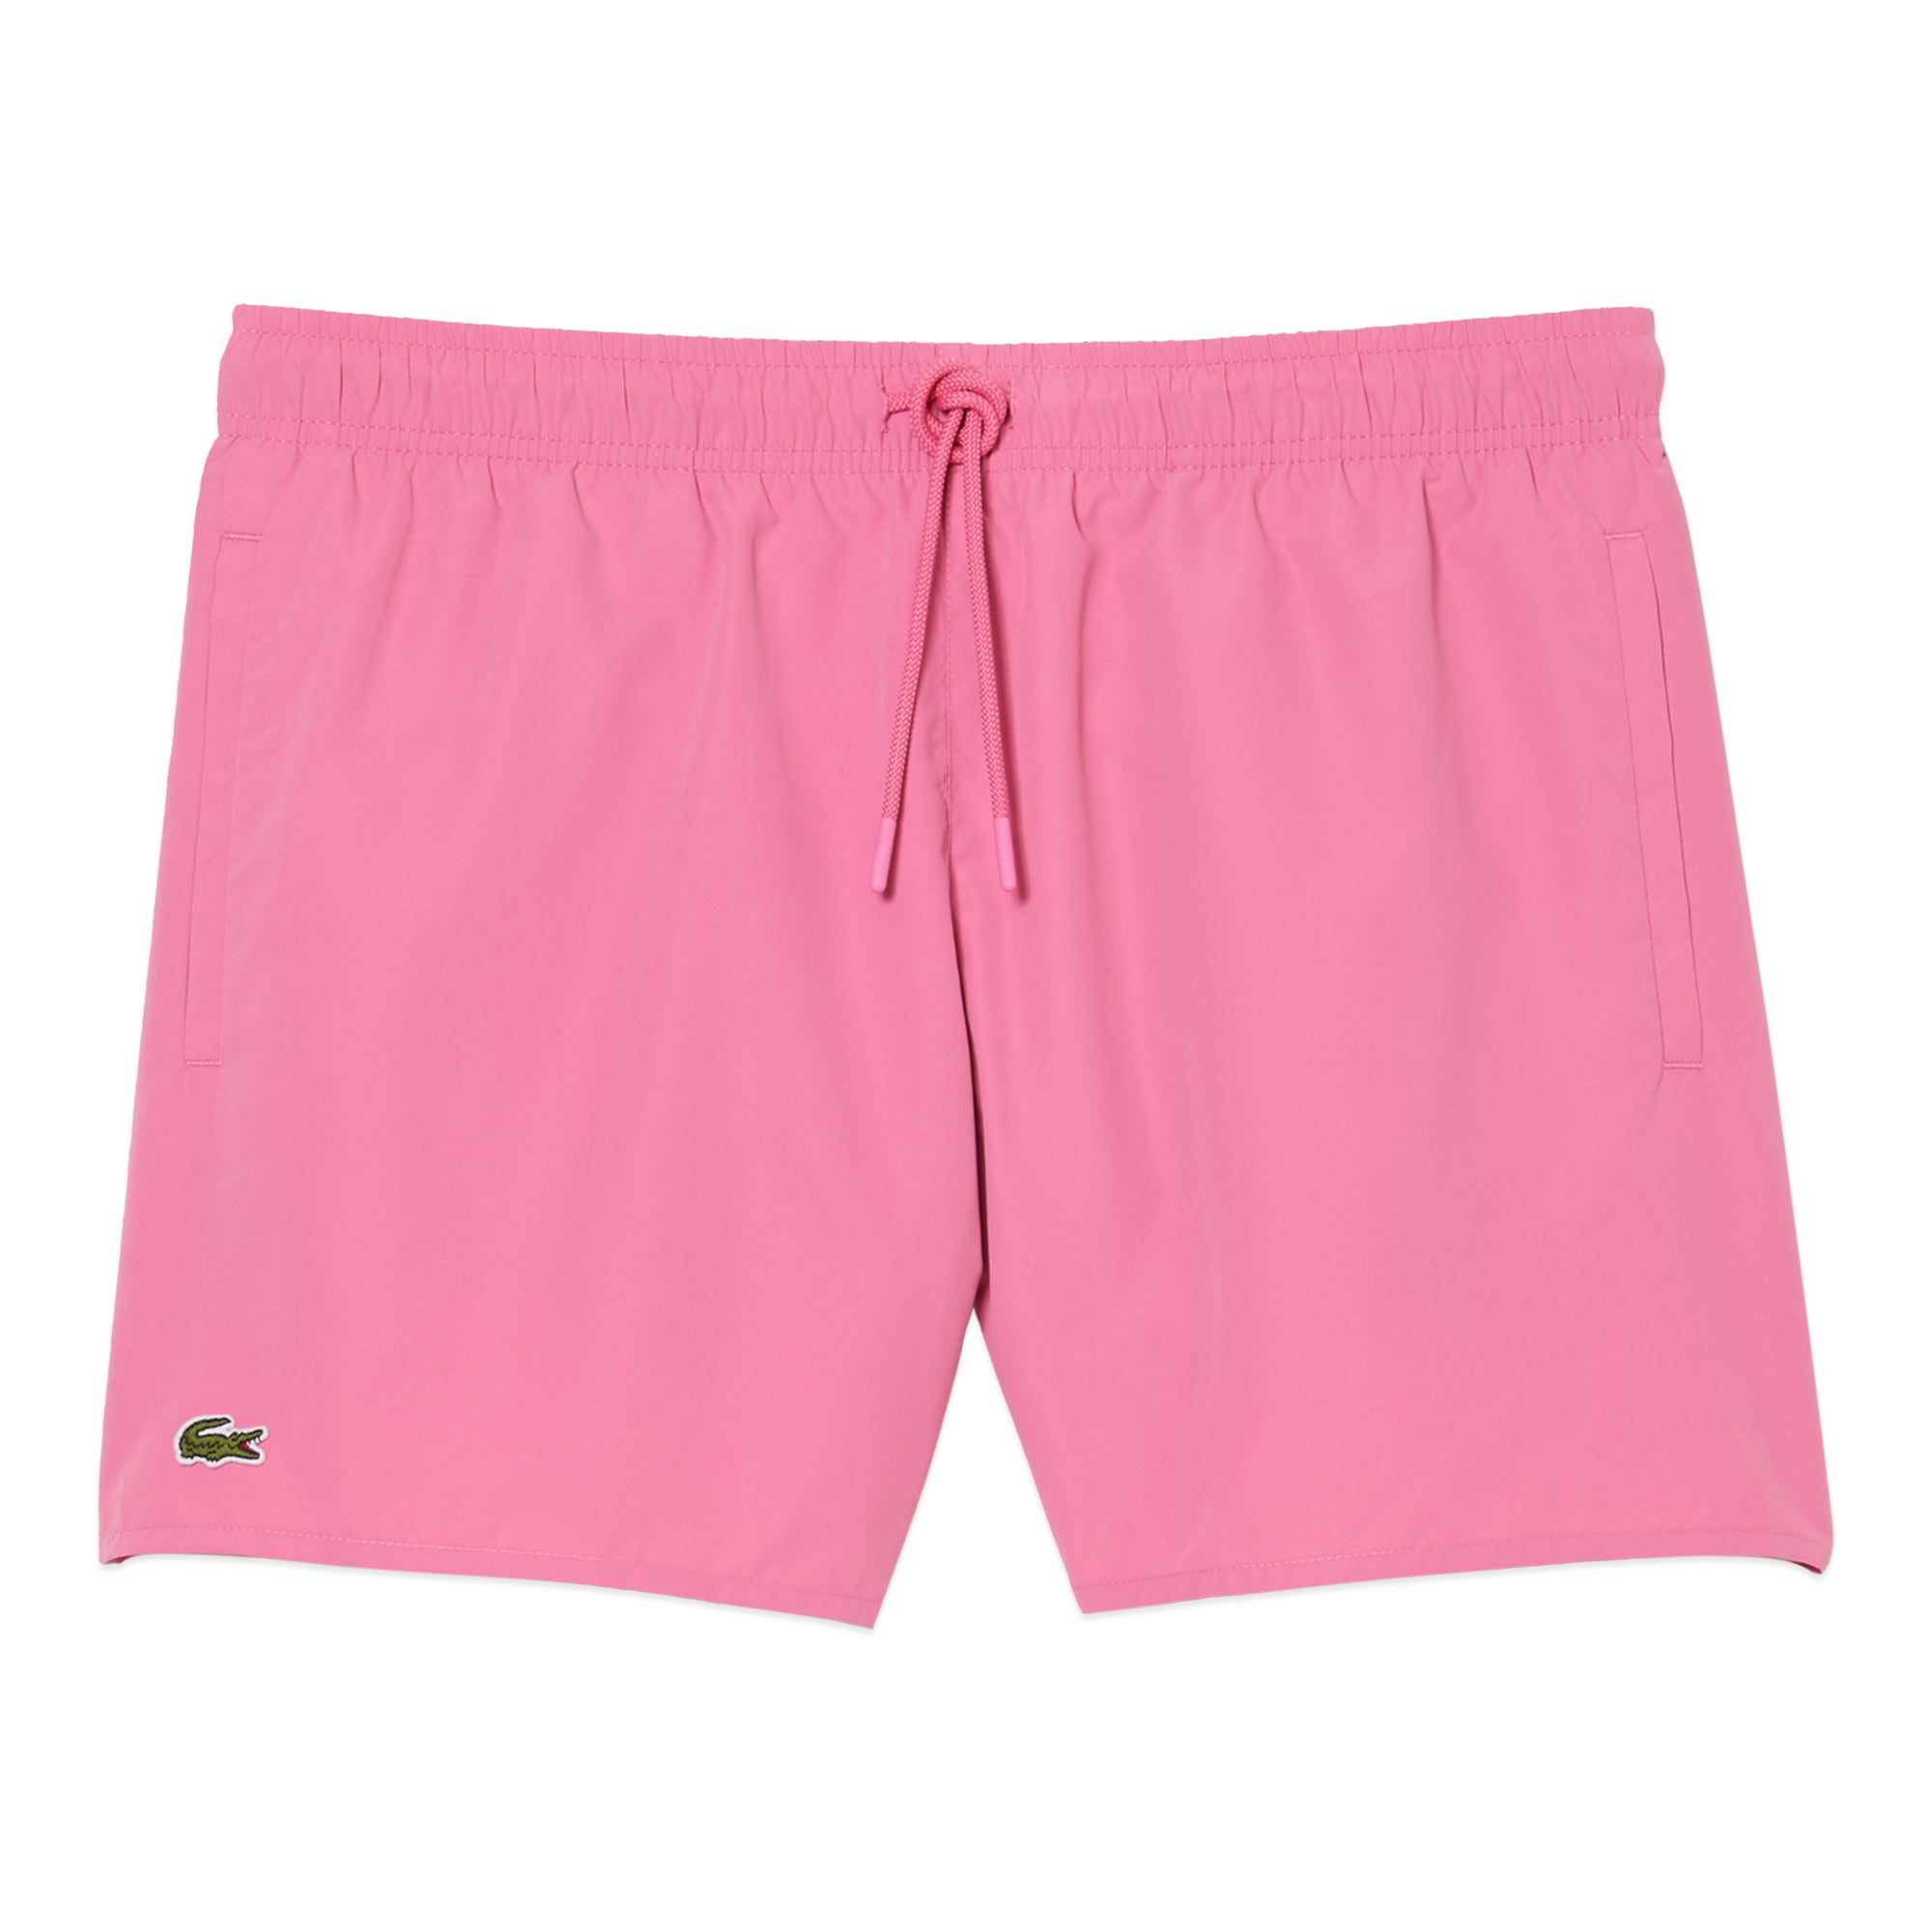 Lacoste Light Quick Dry Swim Shorts MH6270 - Reseda Pink